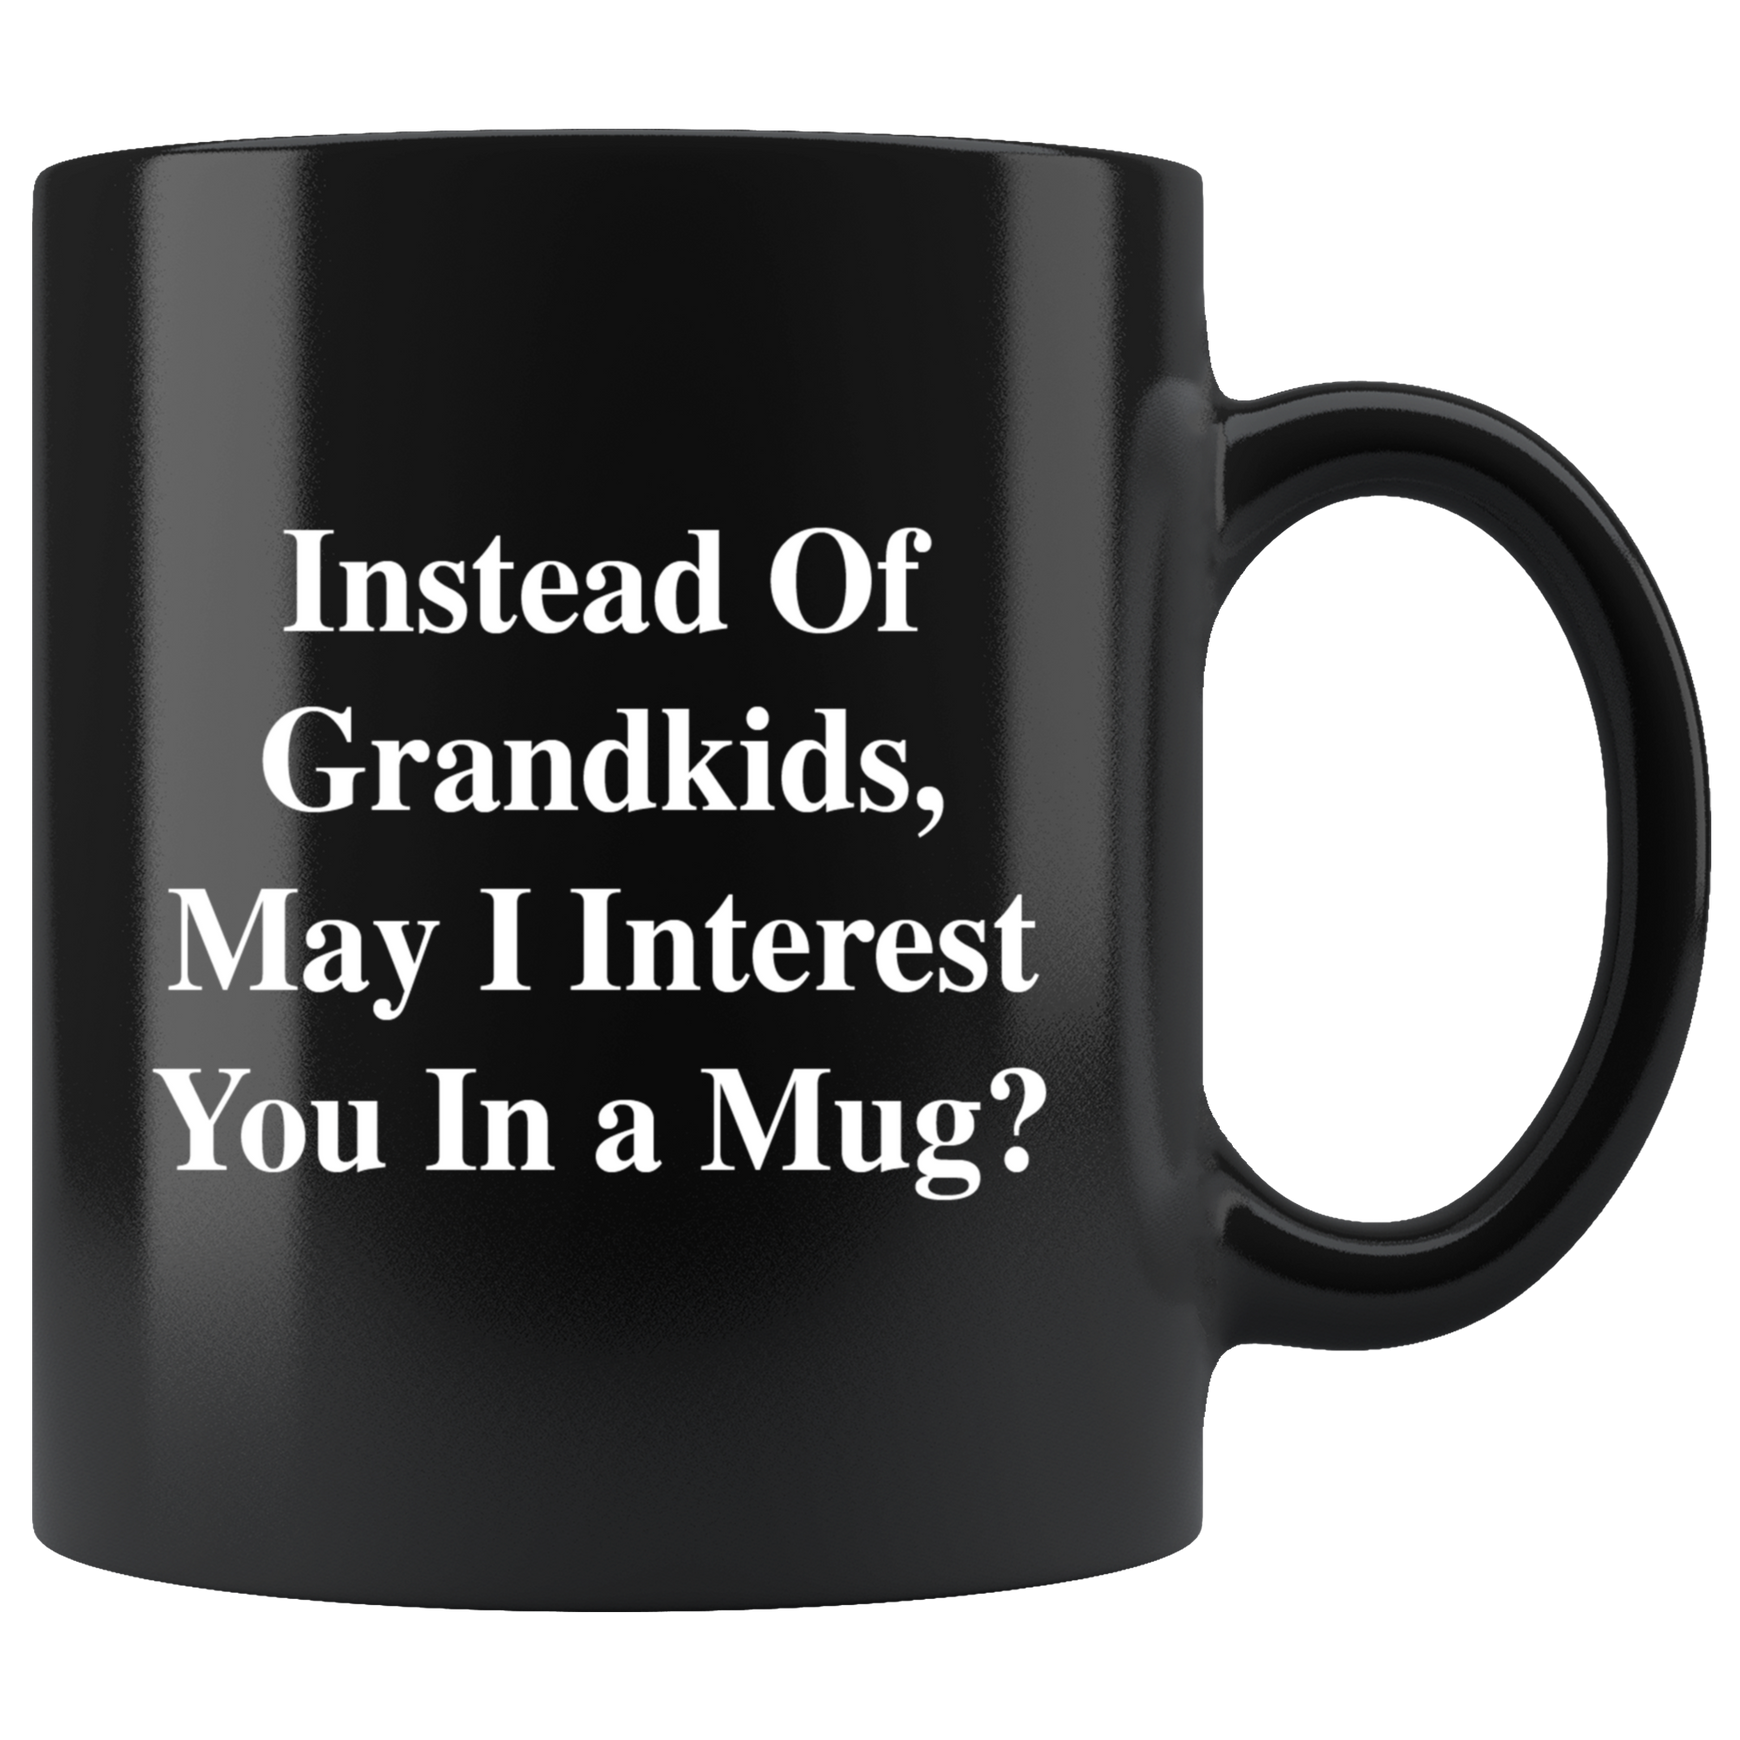 Instead of Grandkids Mug